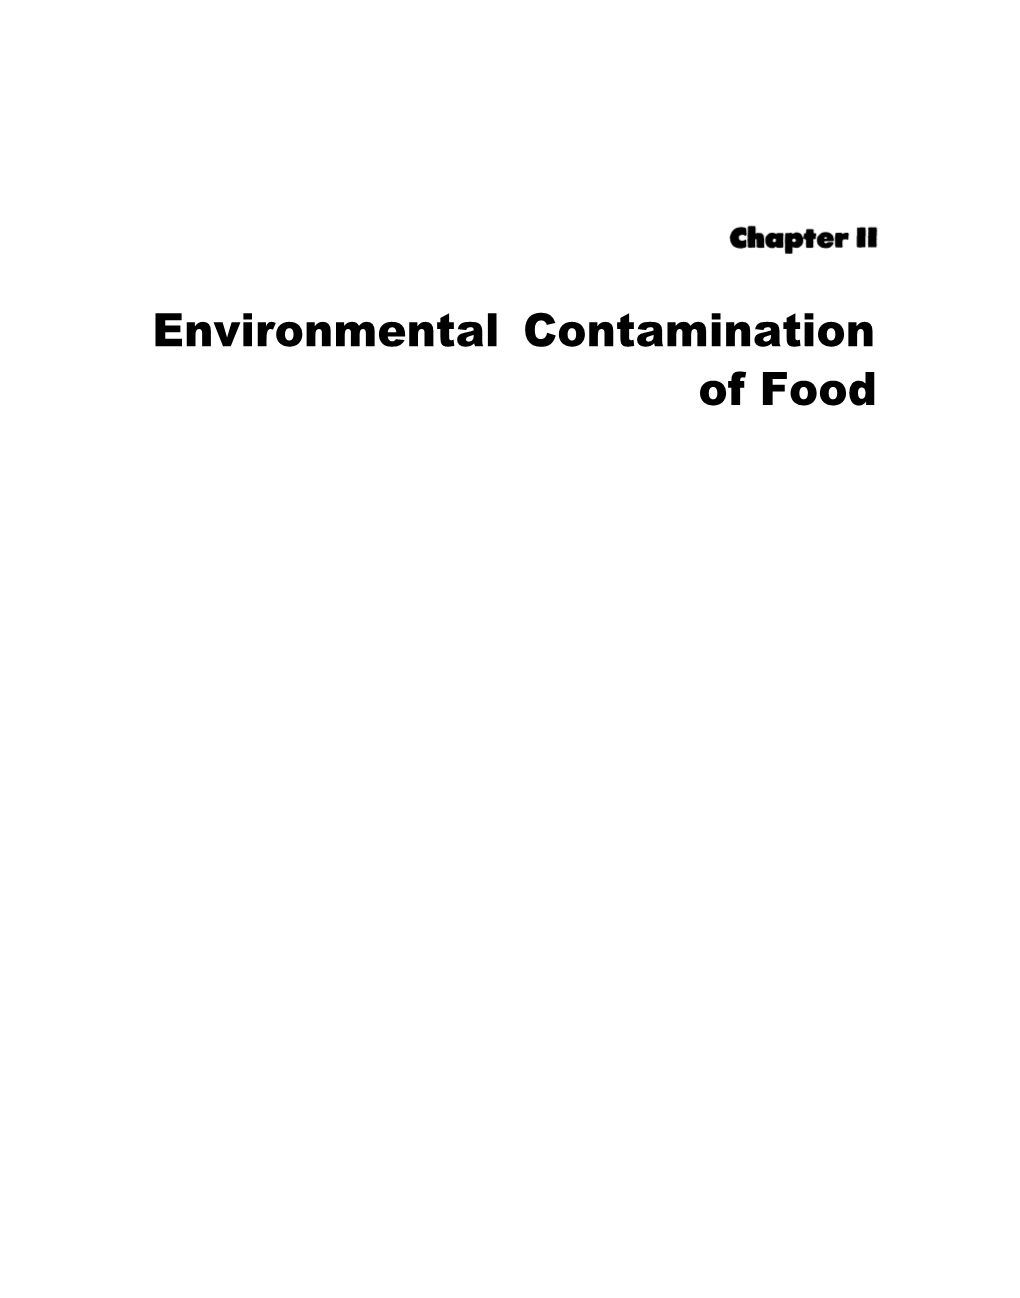 Environmental Contaminants in Food (Part 4 Of